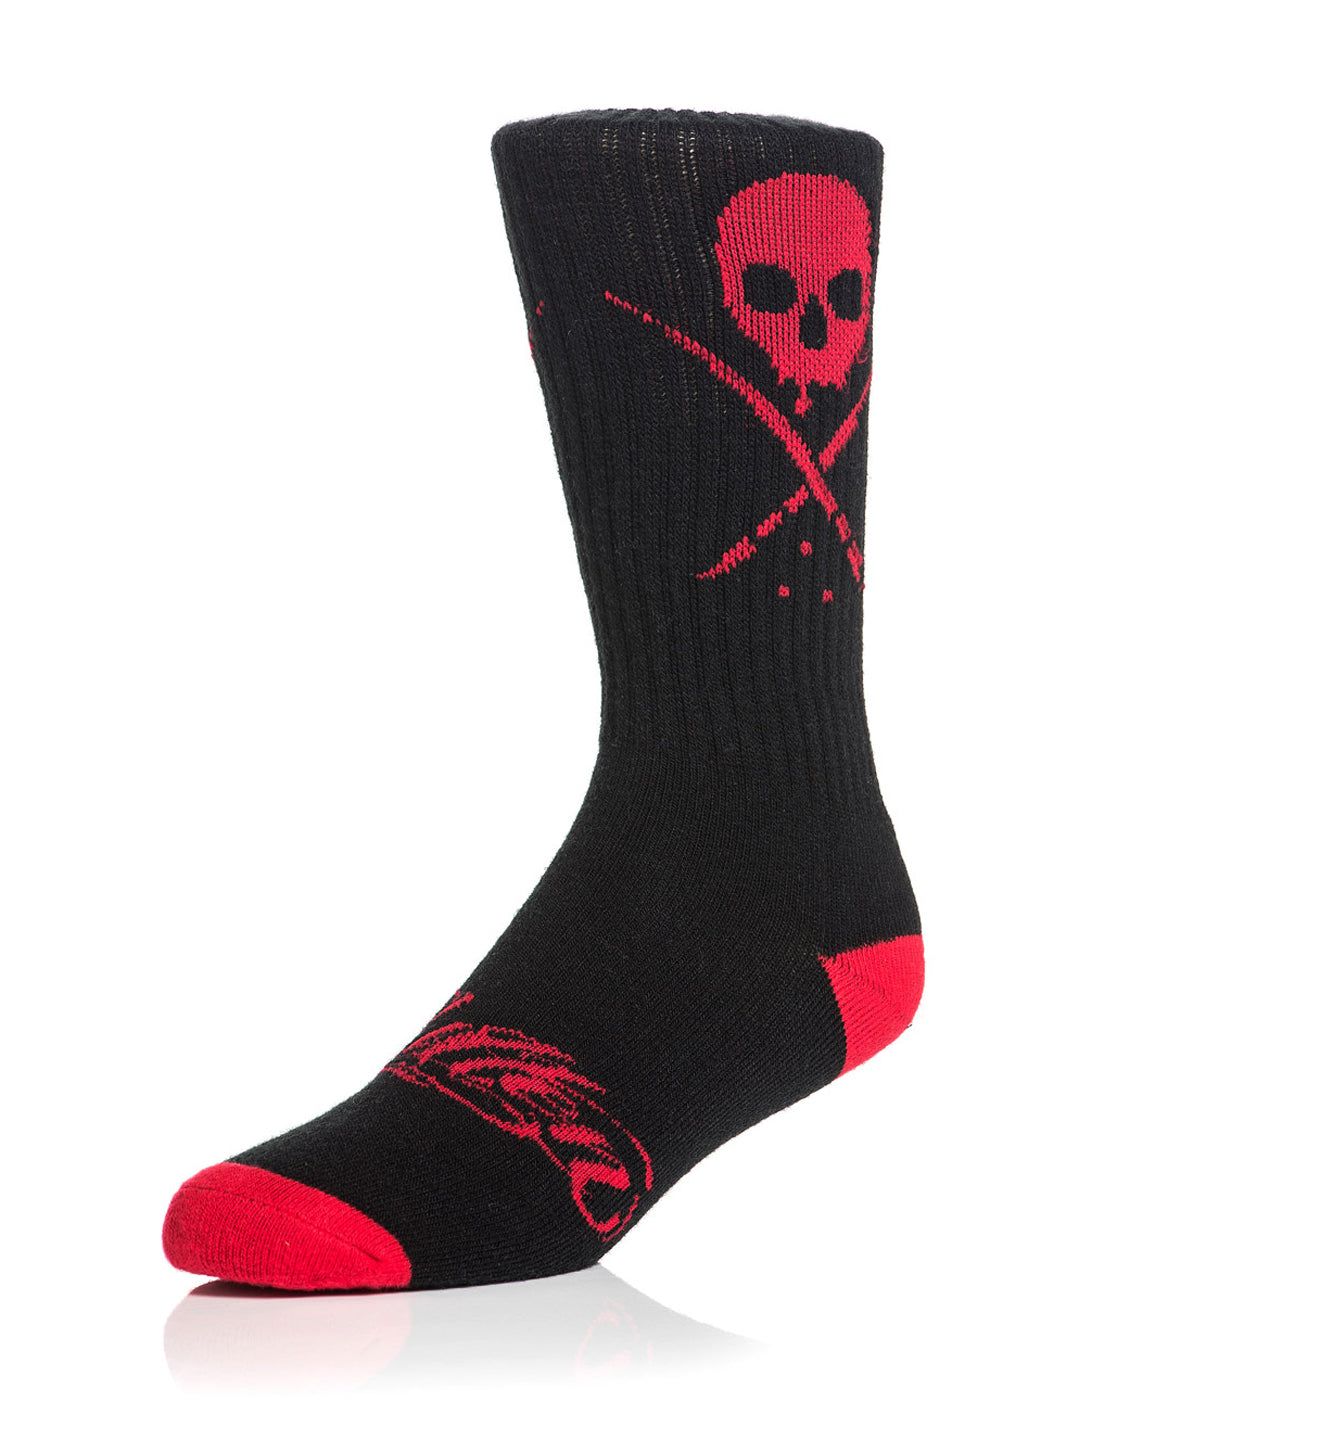 Standard Issue Socks Black/Red - 